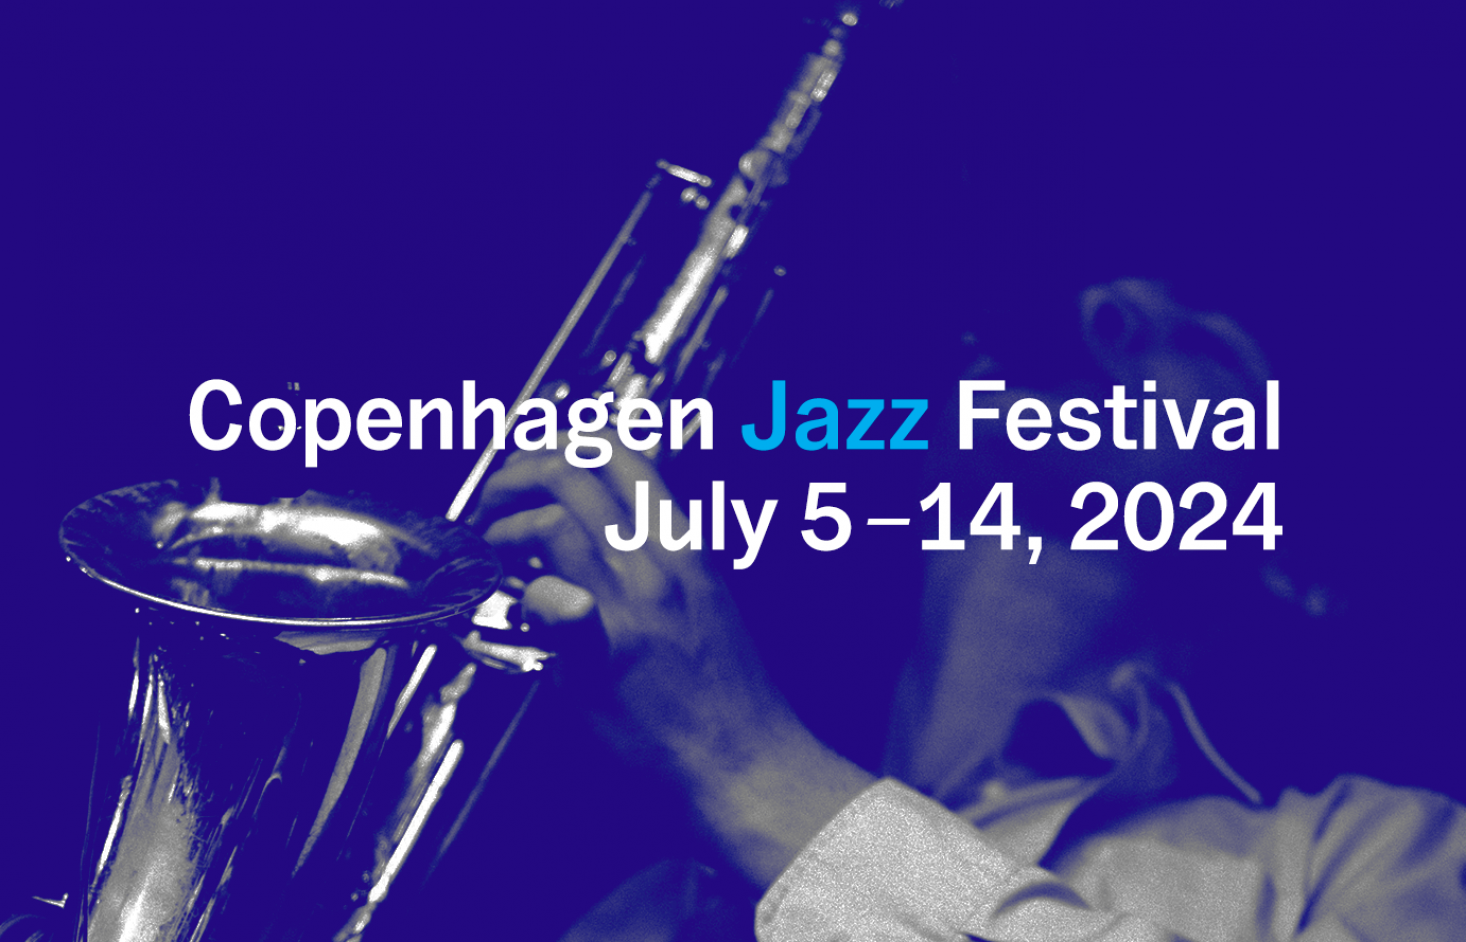 Start planning: Copenhagen Jazz Festival 2024